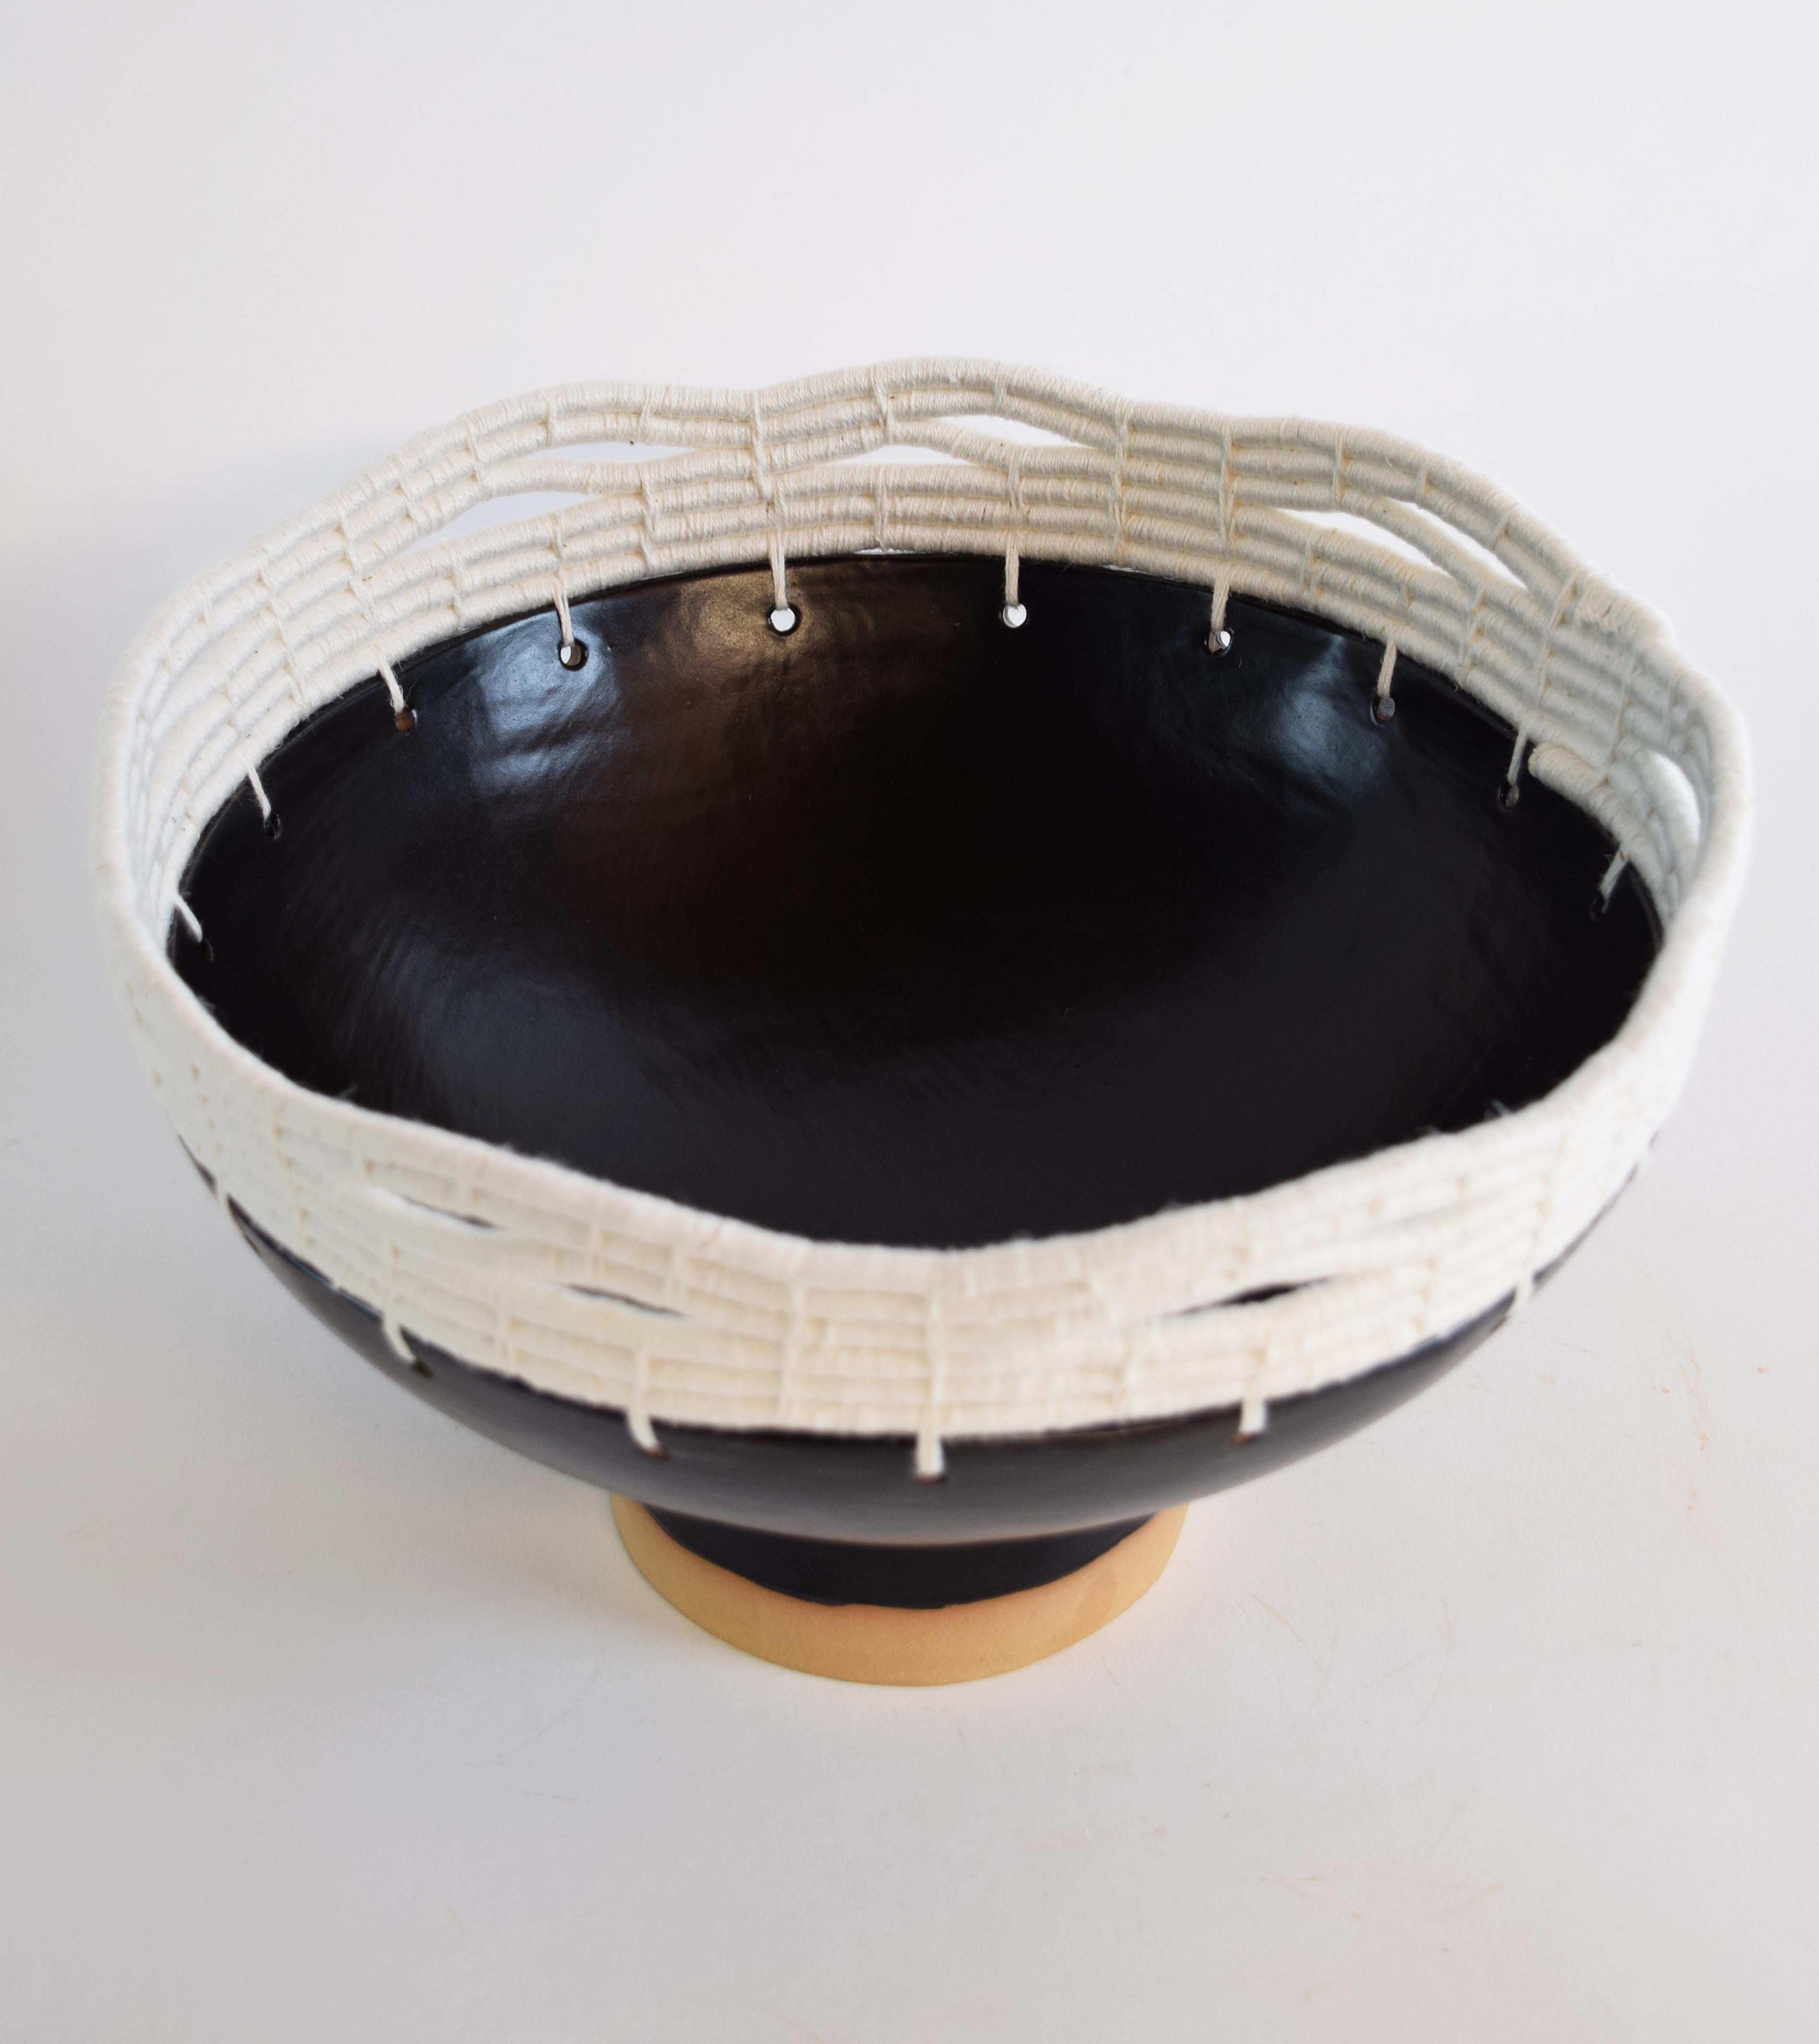 Organic Modern One of a Kind Handmade Ceramic Bowl #804, Satin Black Glaze & Woven White Cotton